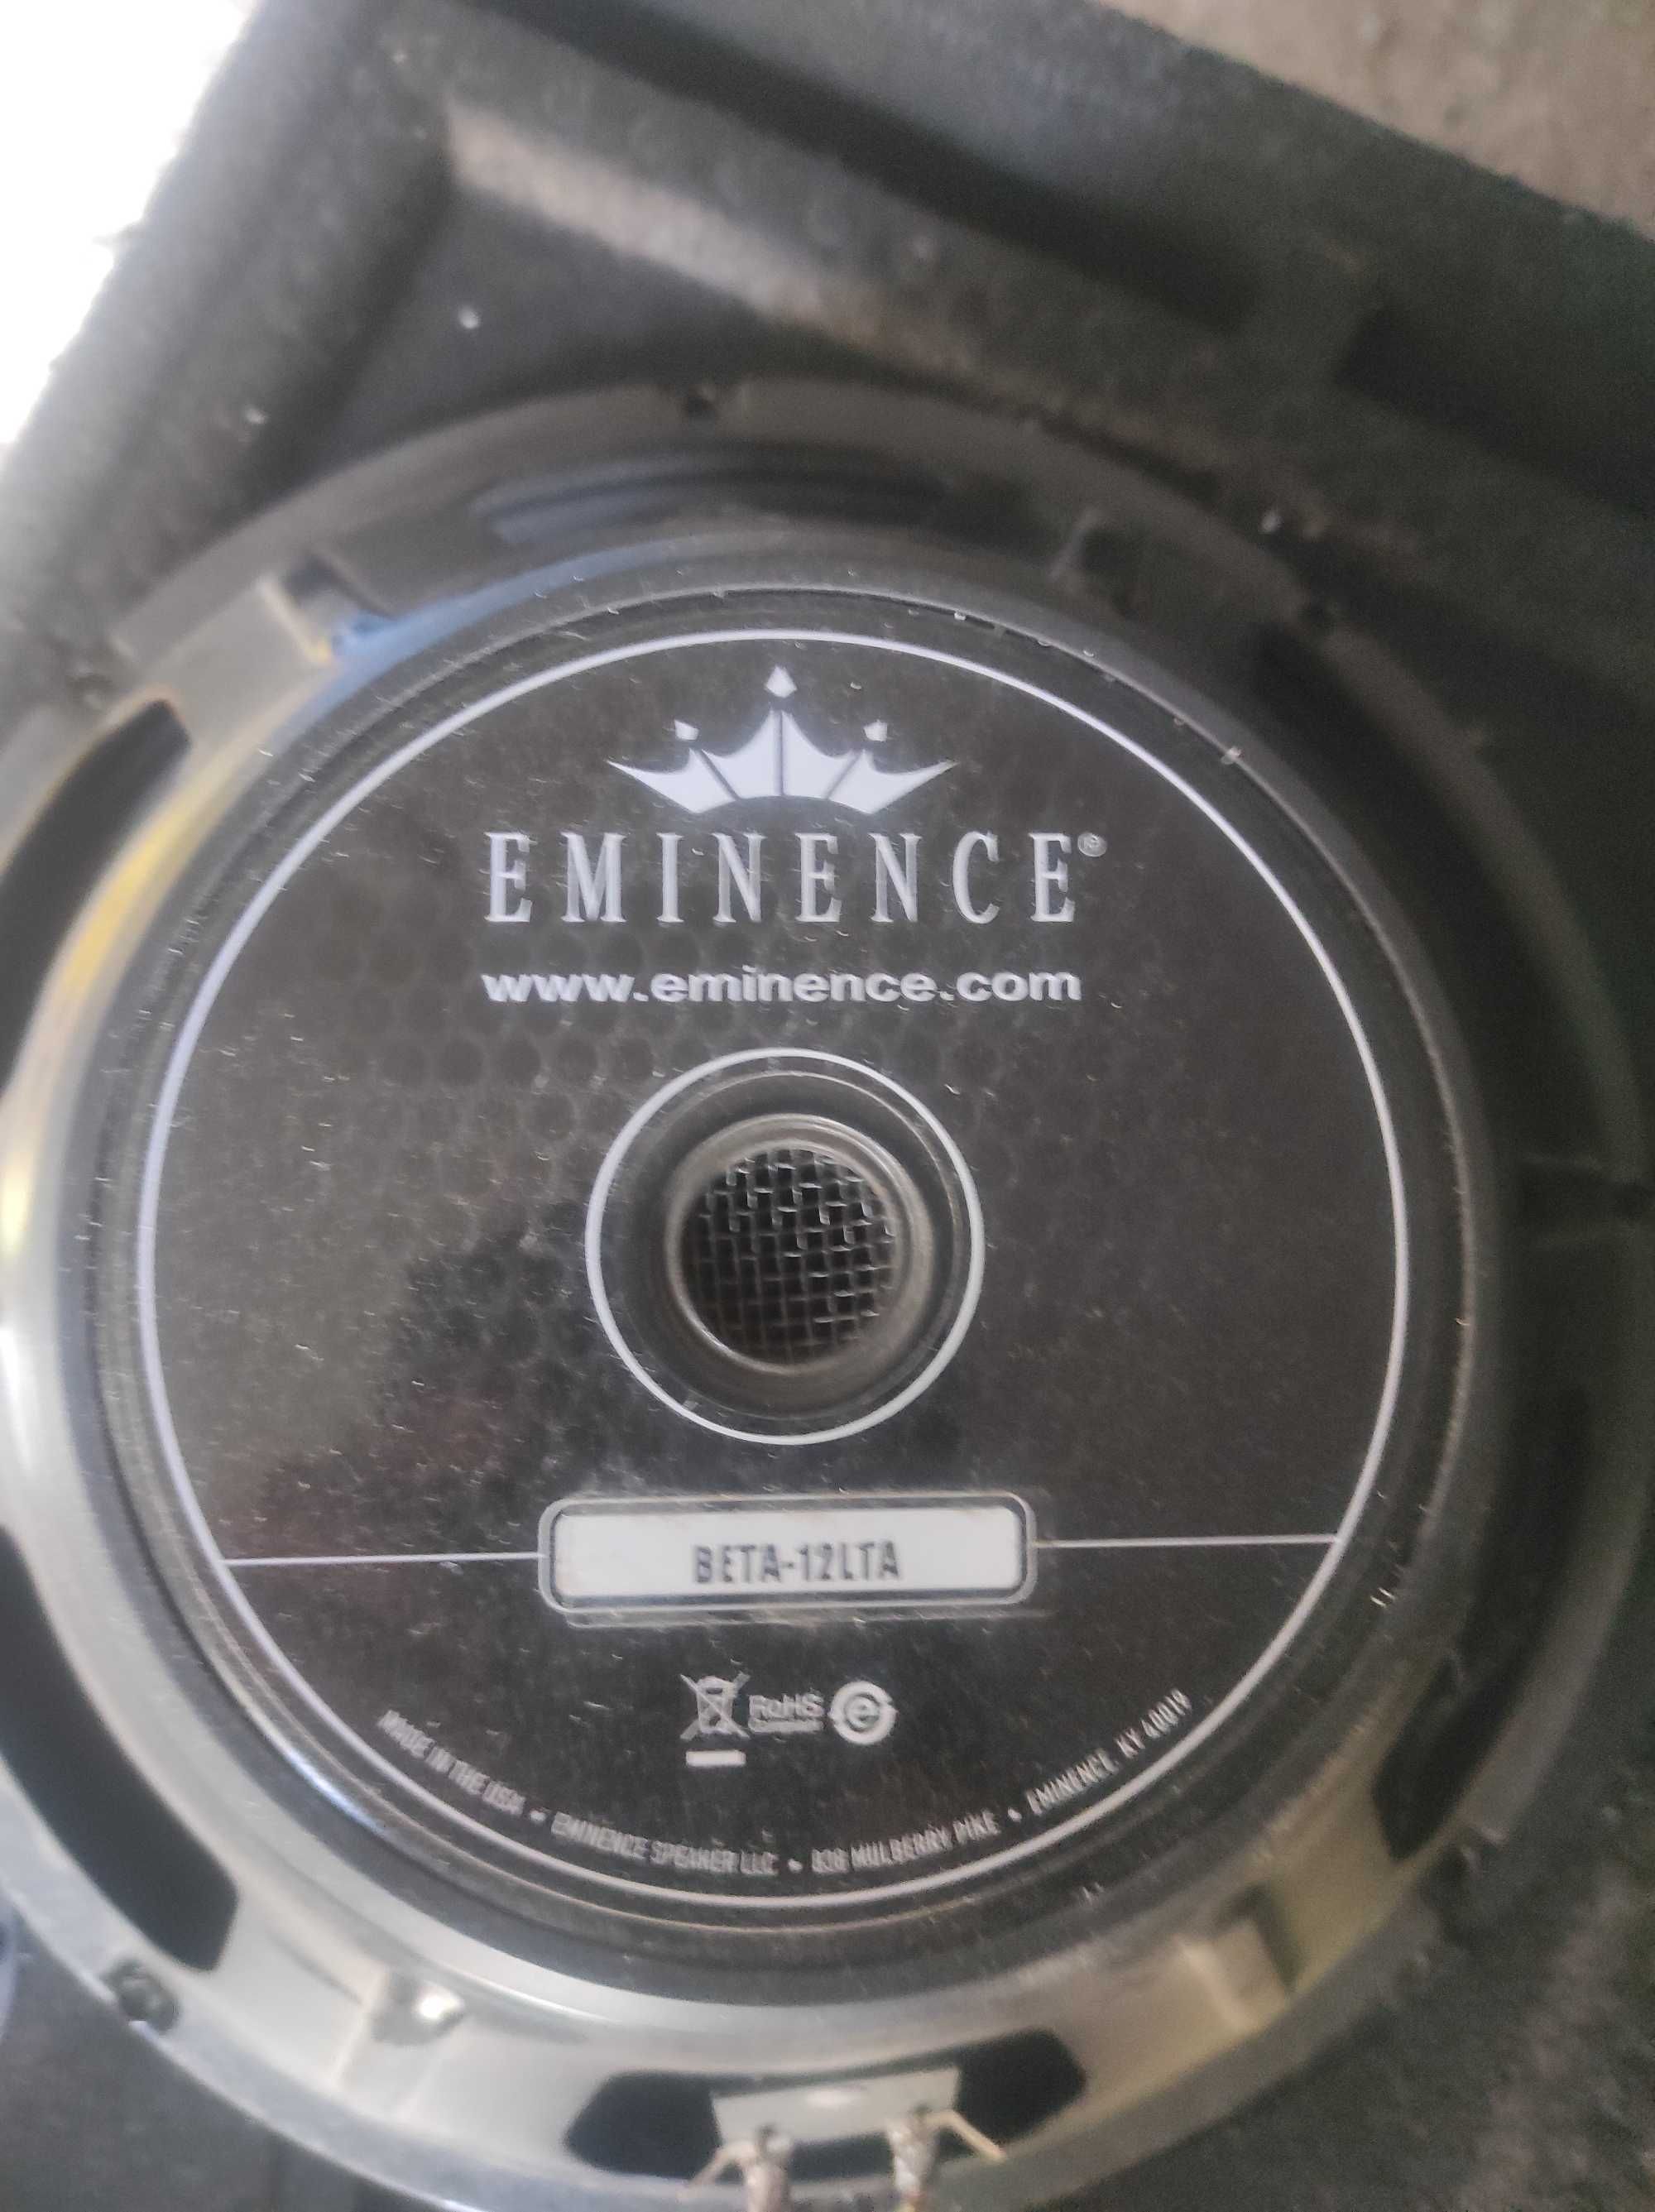 Kolumna basowa Noisy Box 225 wat Eminence Beta- 12 LTA